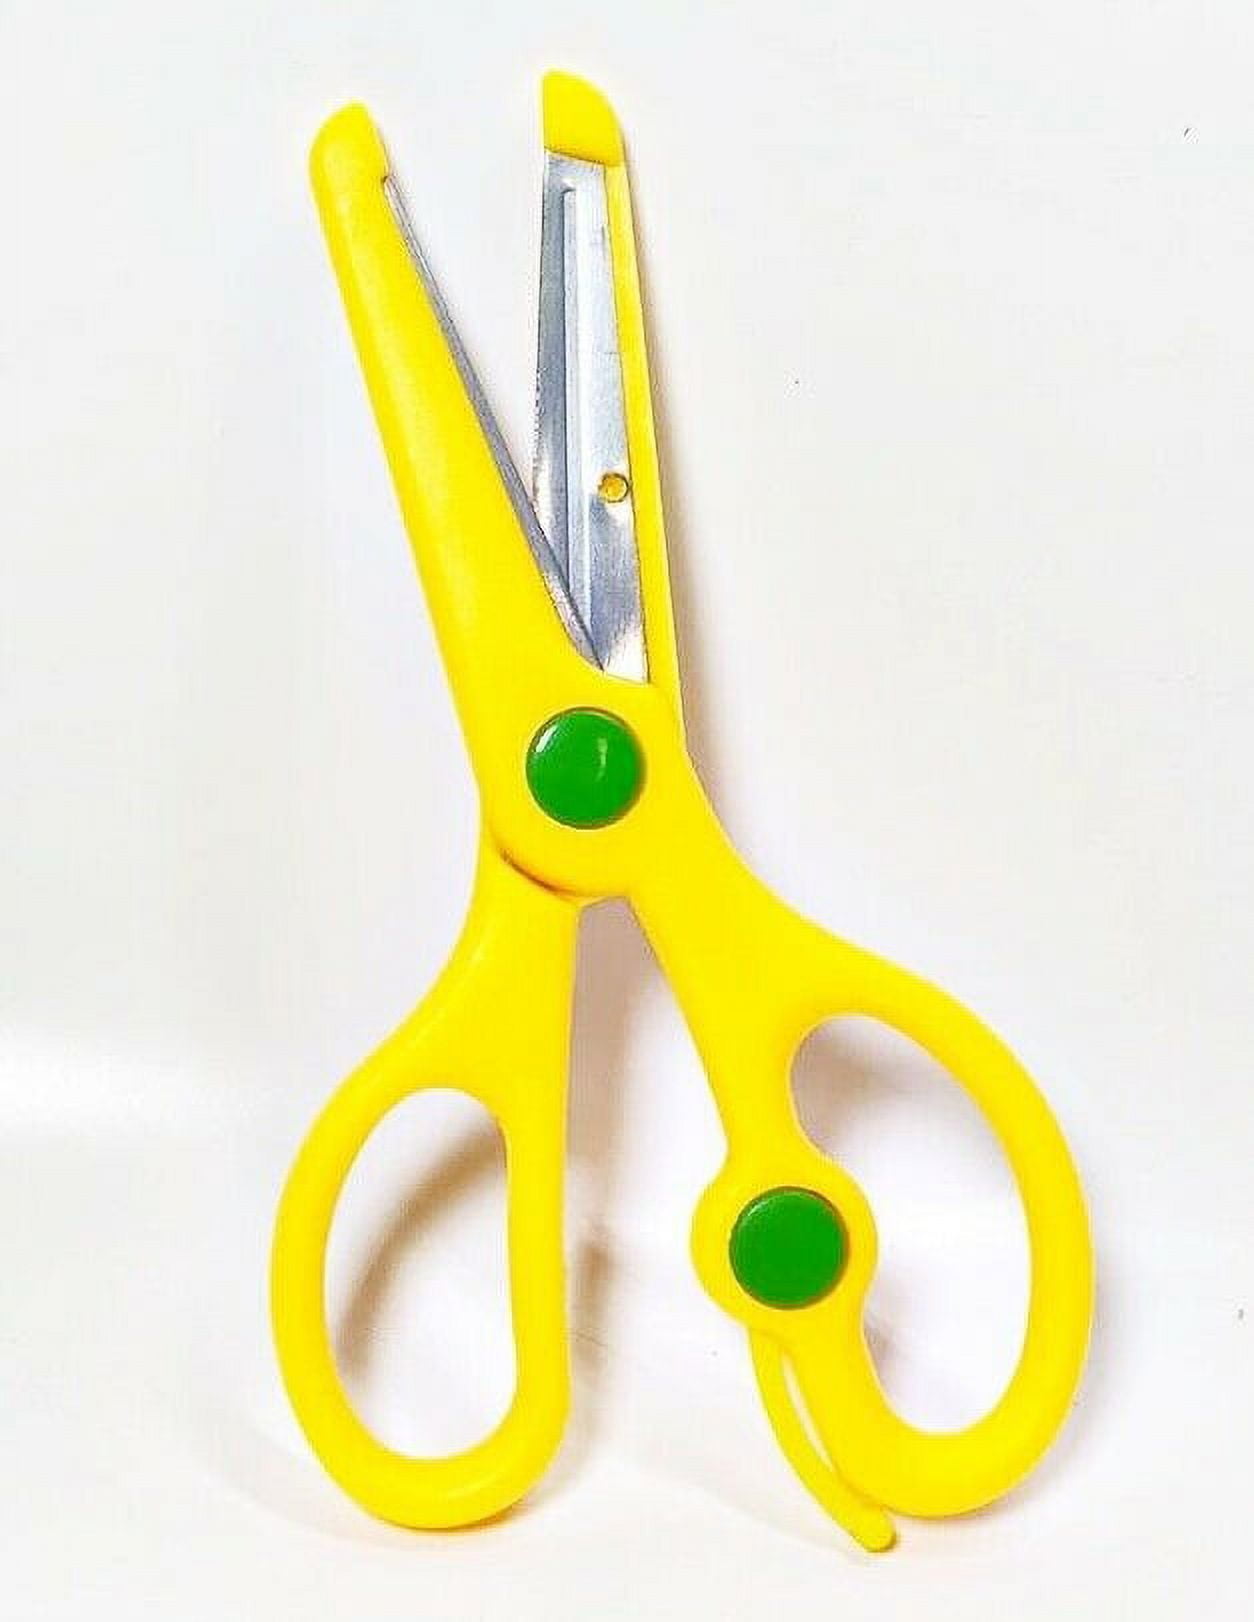 Should children use safety scissors? - MaxParent